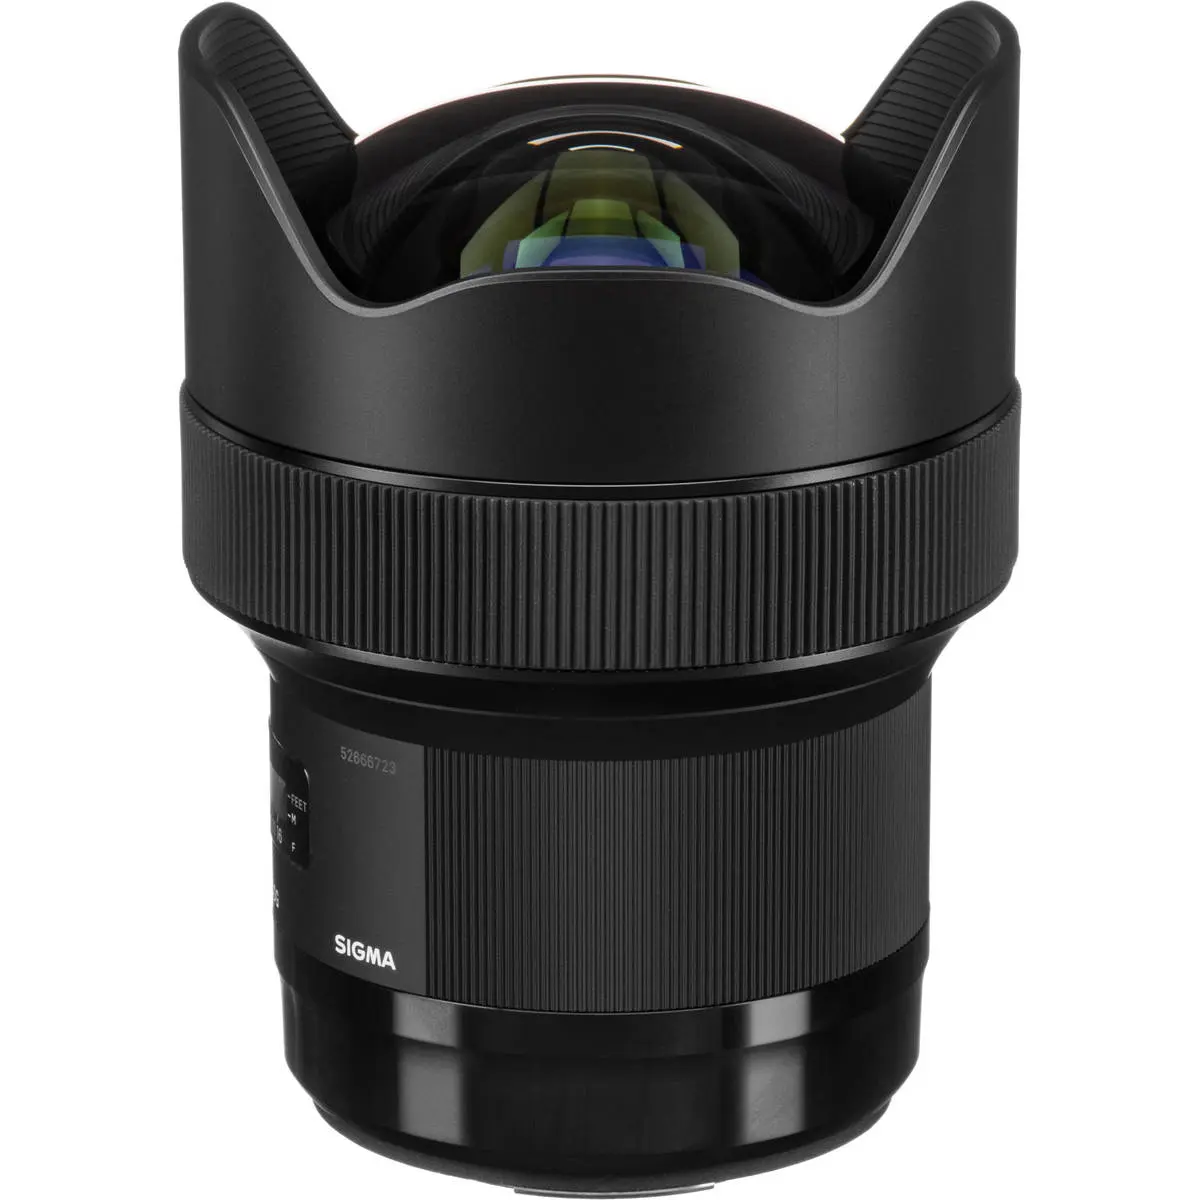 1. Sigma 14mm F1.8 DG HSM | Art (Canon) Lens